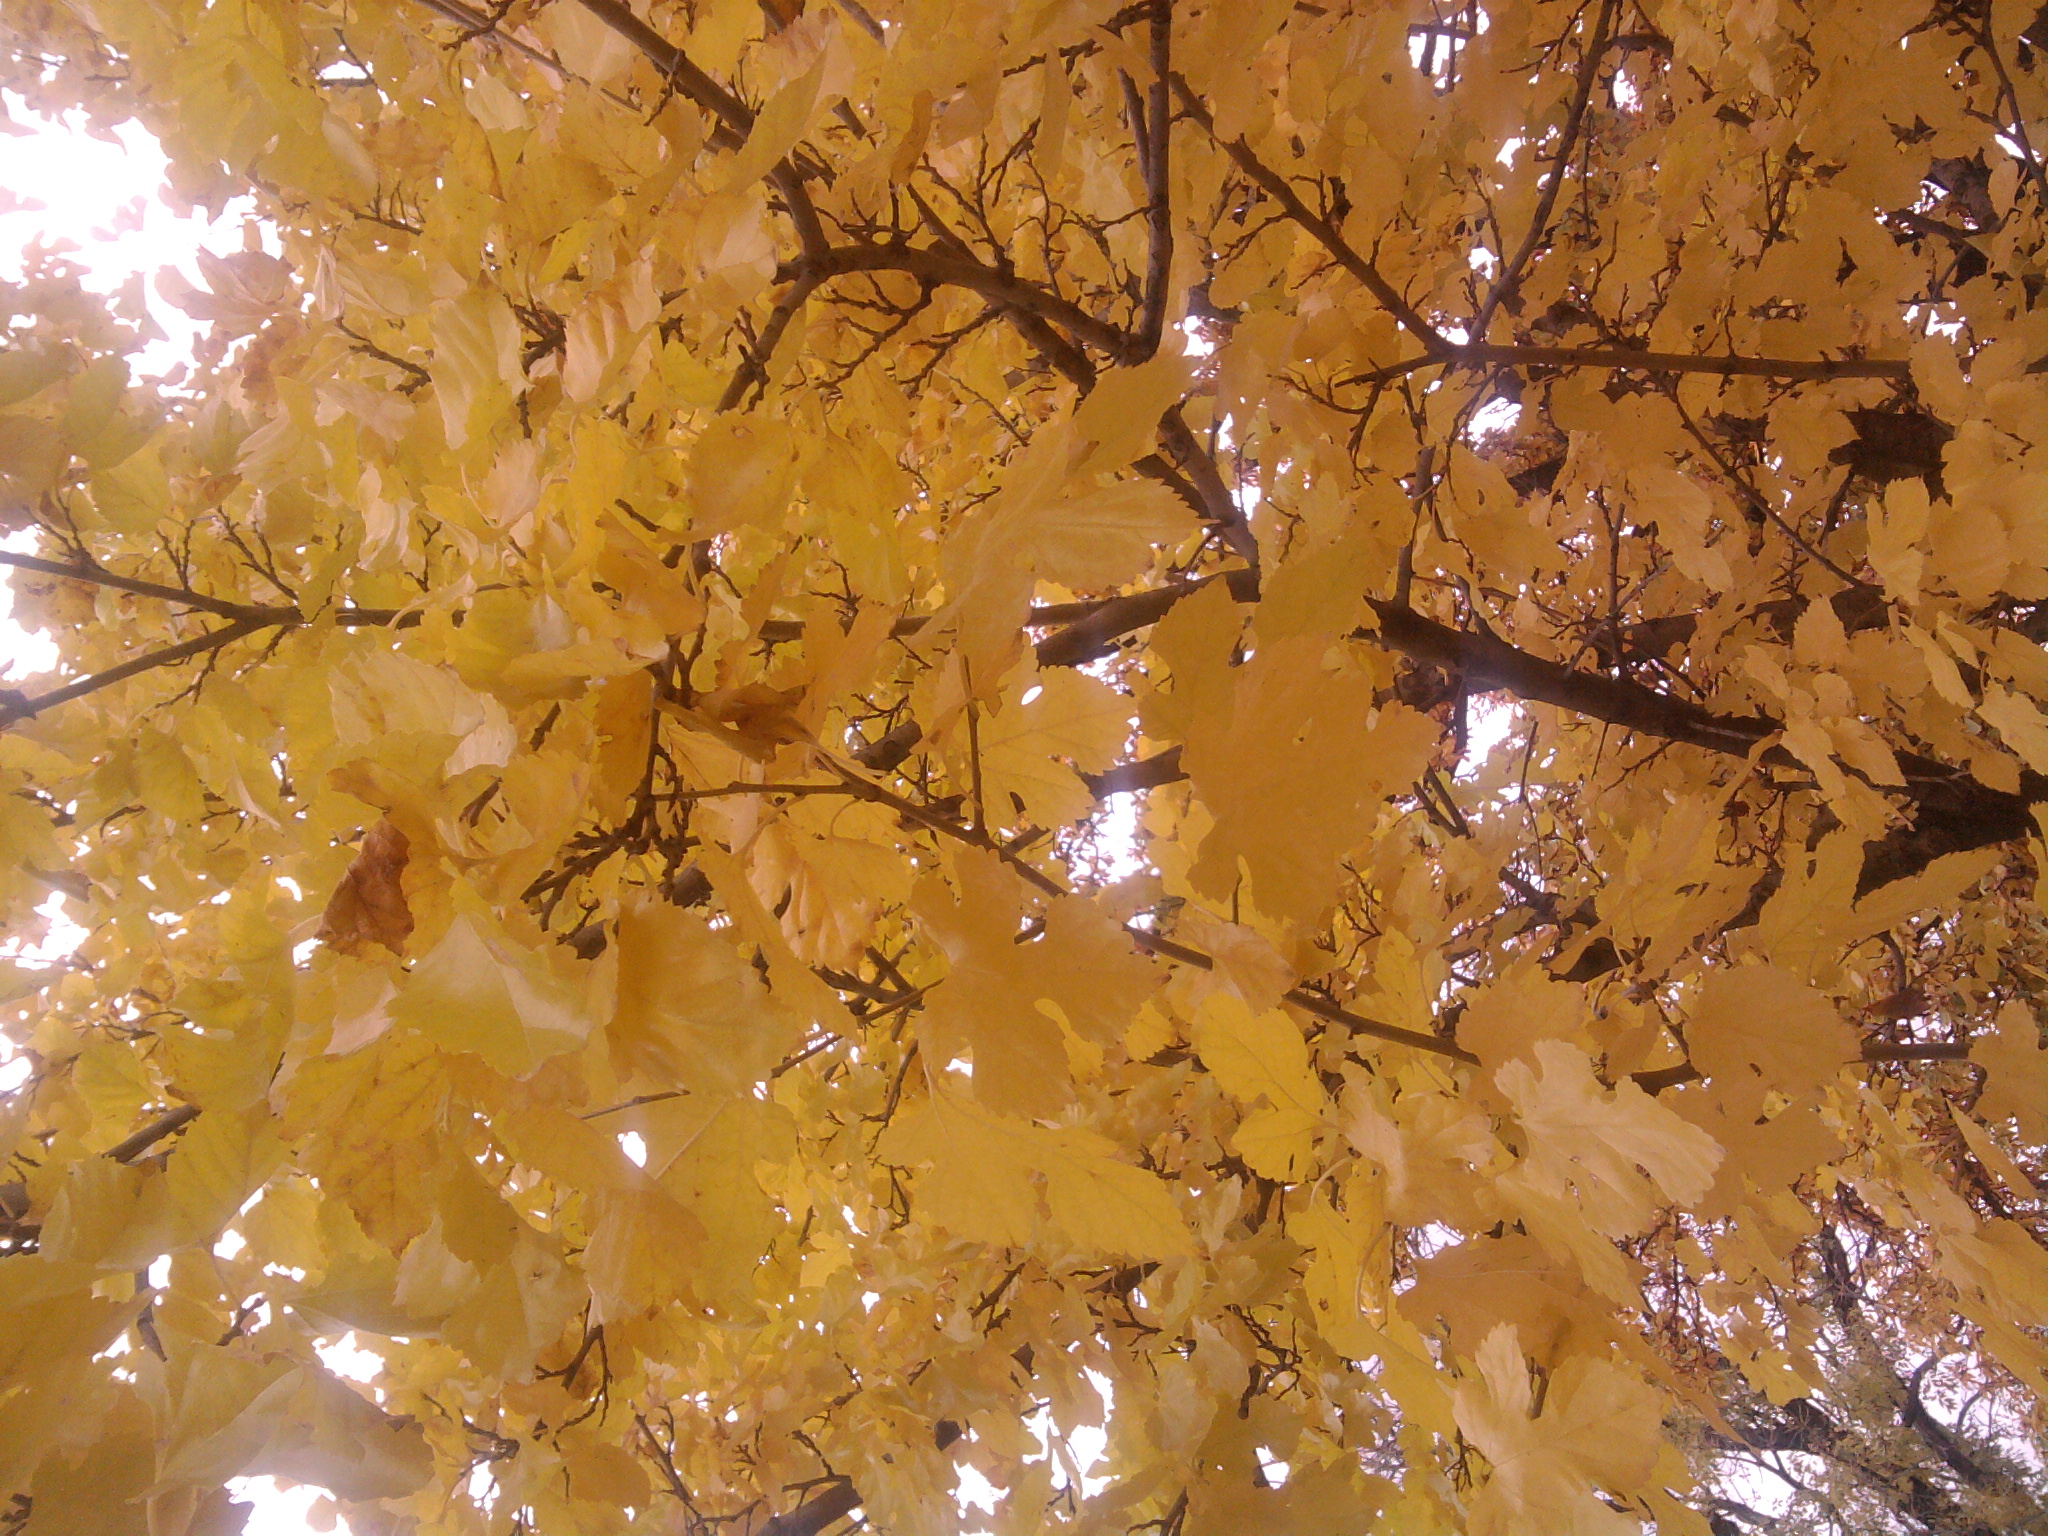 javor babyka se na podzimzbarvuje klidnou žlutou barvu